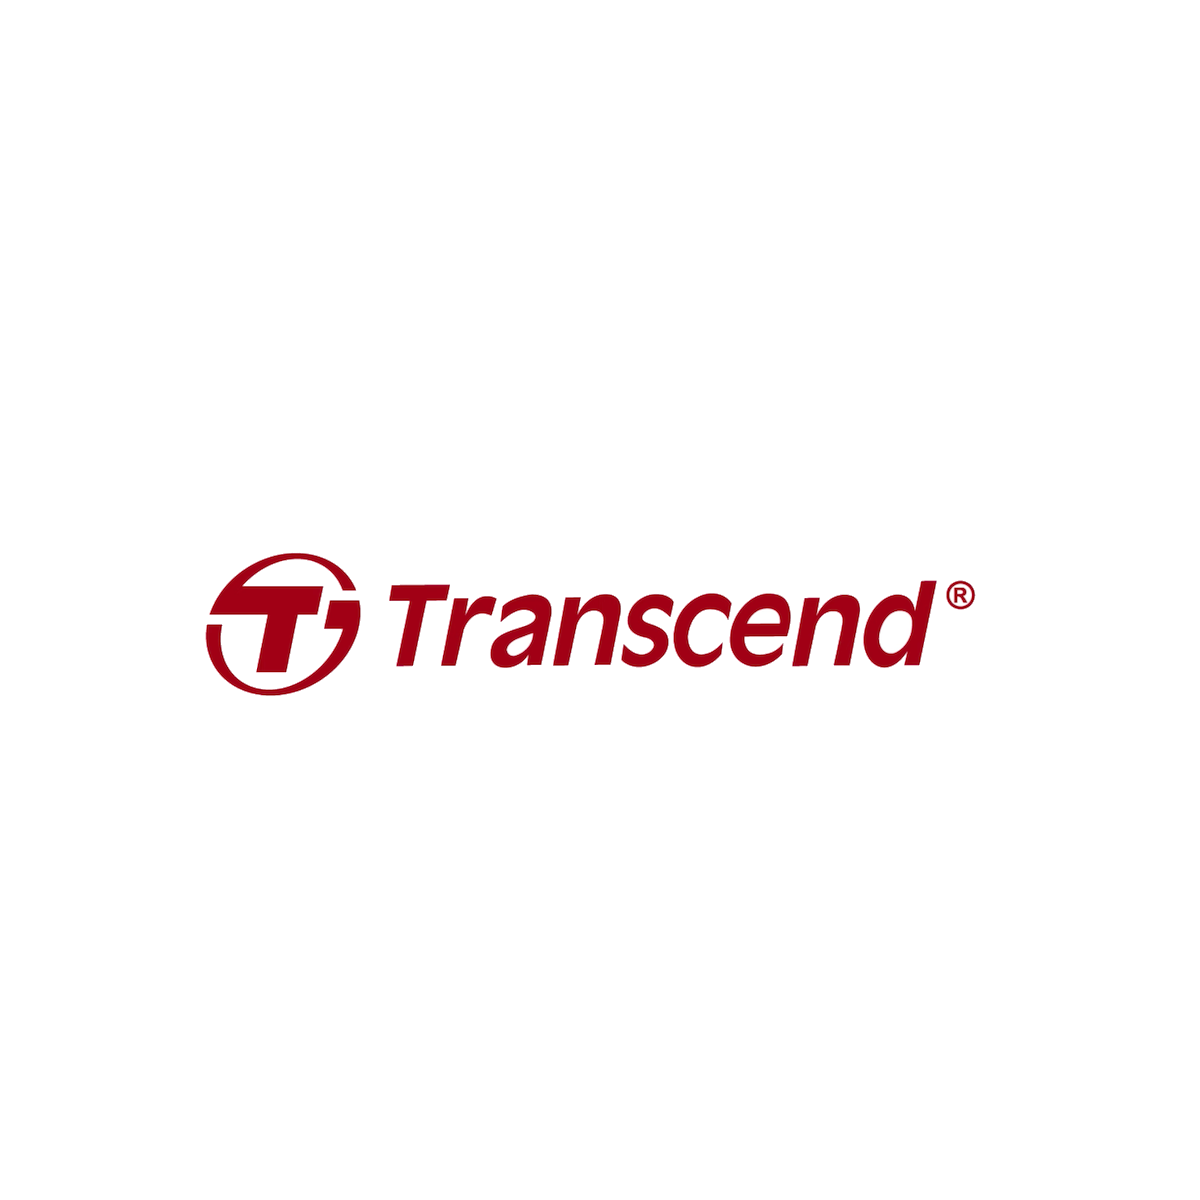 Transcend DrivePro 250 Dashcam inkl. 64 GB Micro SD